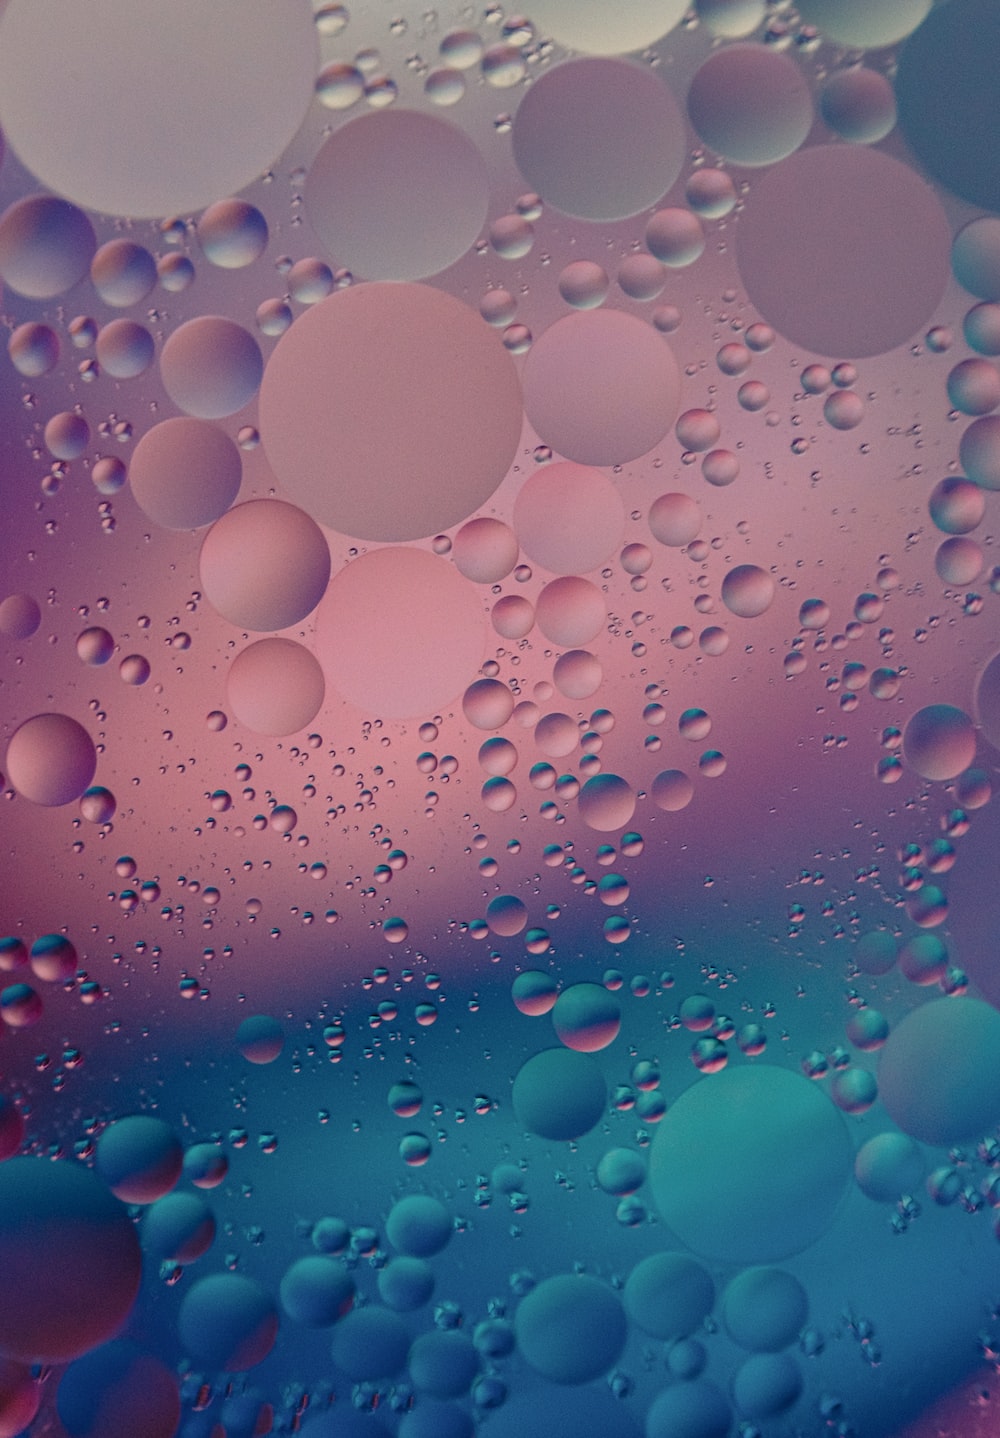 Bubbles Wallpaper Picture. Download Free Image